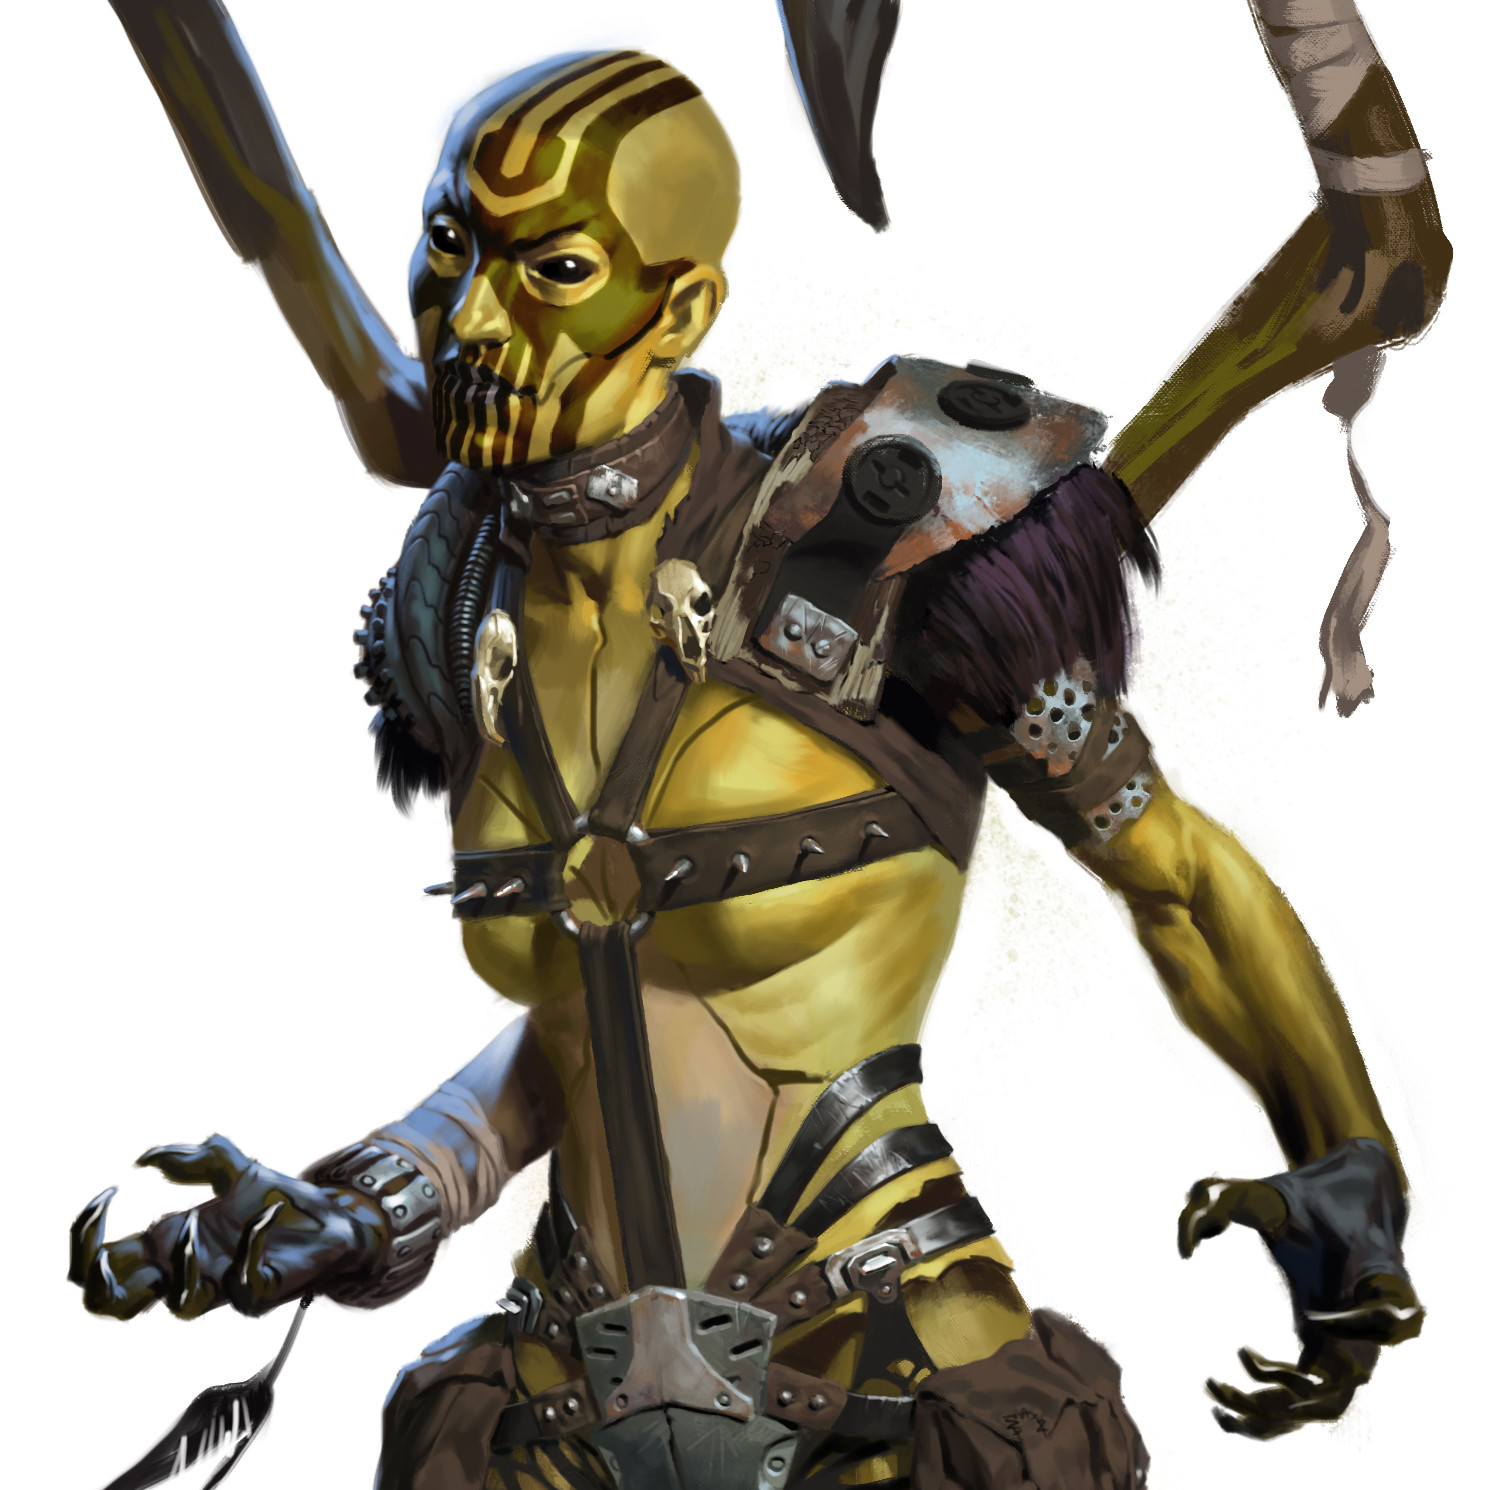 ArtStation - Mortal Kombat X Character Concept Art